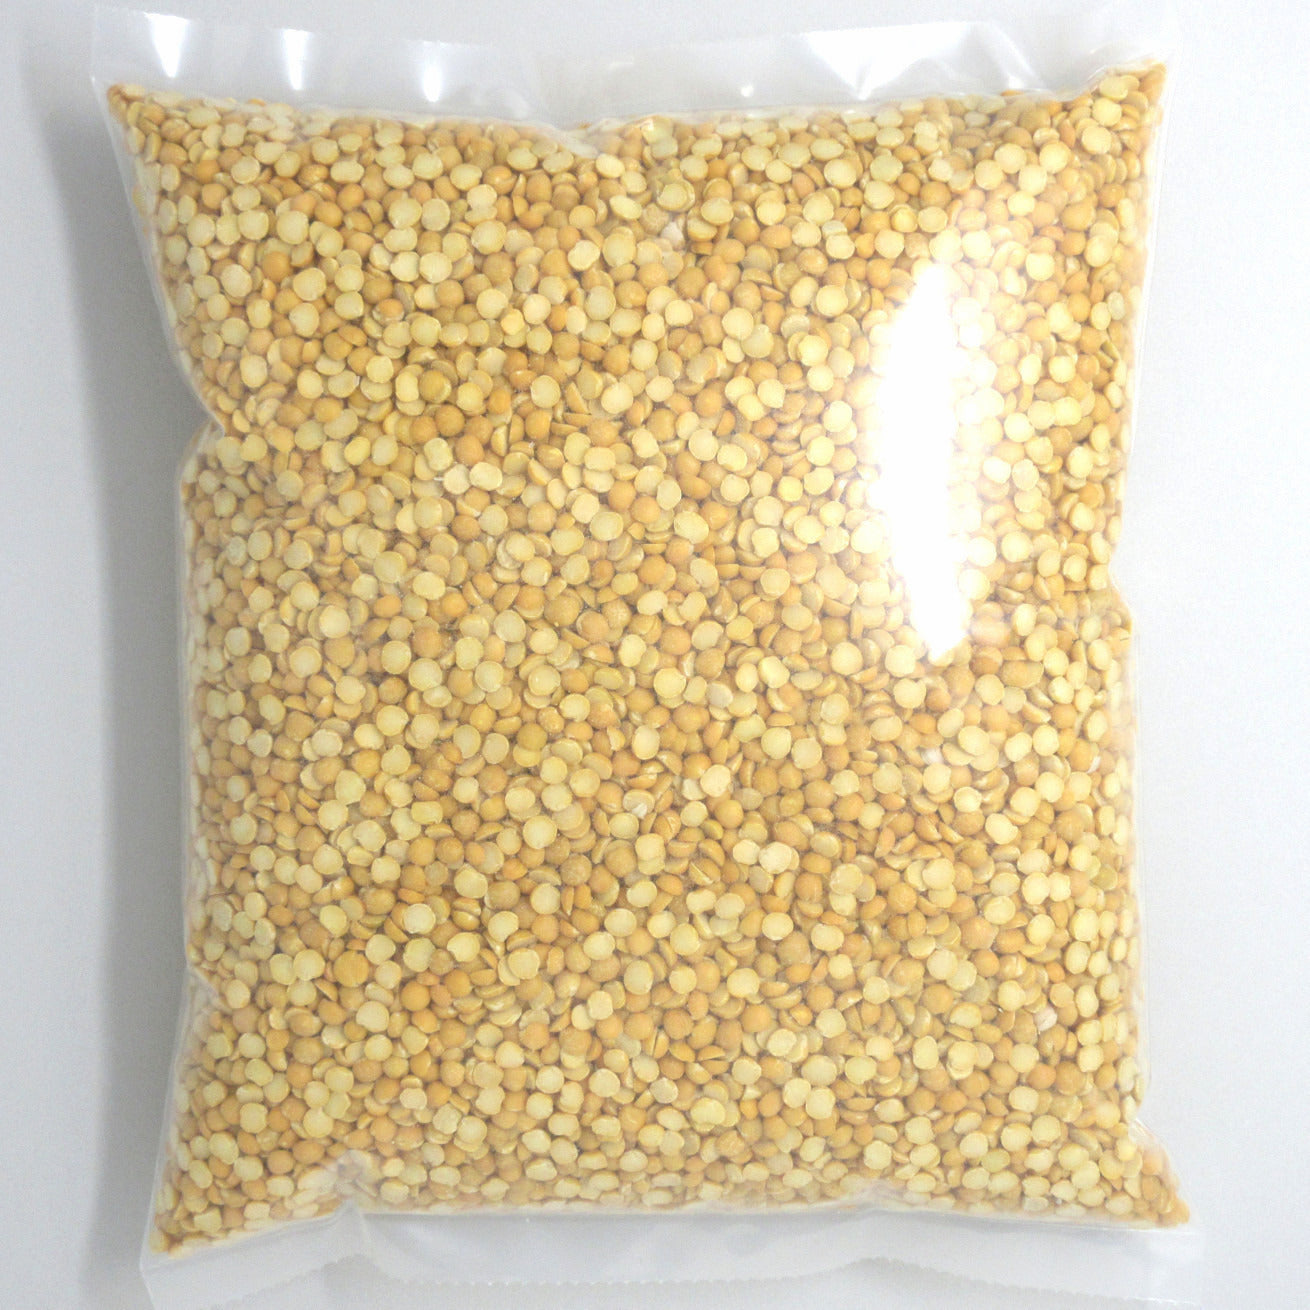 Flour Barrel product image - Split Yellow Peas